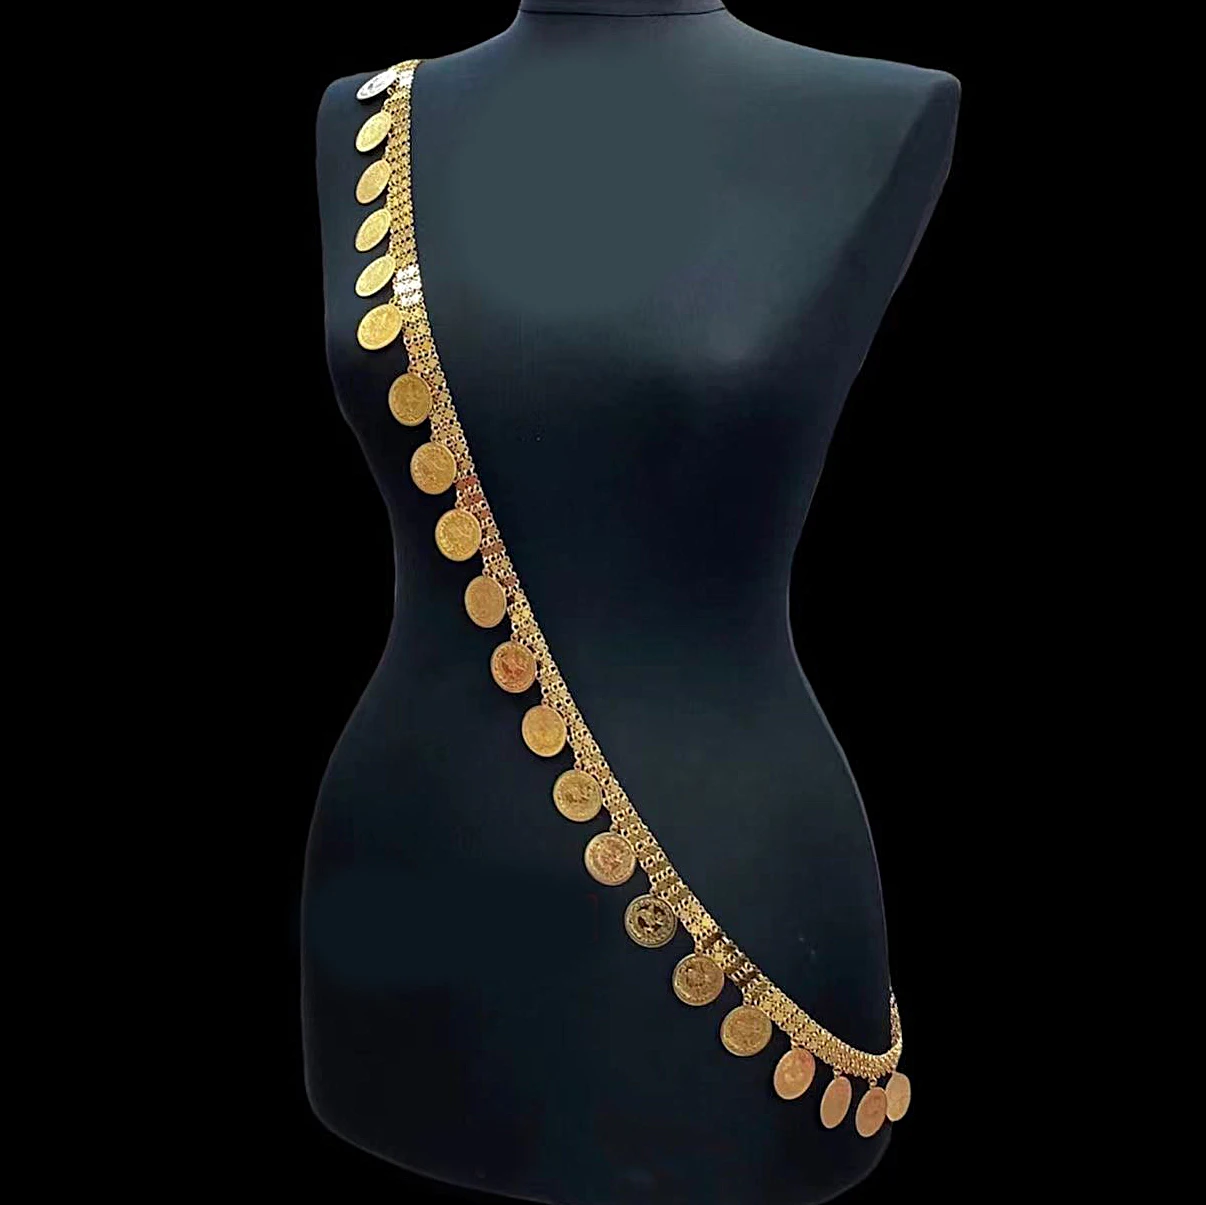 Arab Wedding Luxury Shawl Chain Kurdish Women Jewelry Turkish Coin Necklace Gold-plated Tassel Necklace Necklace Handmade